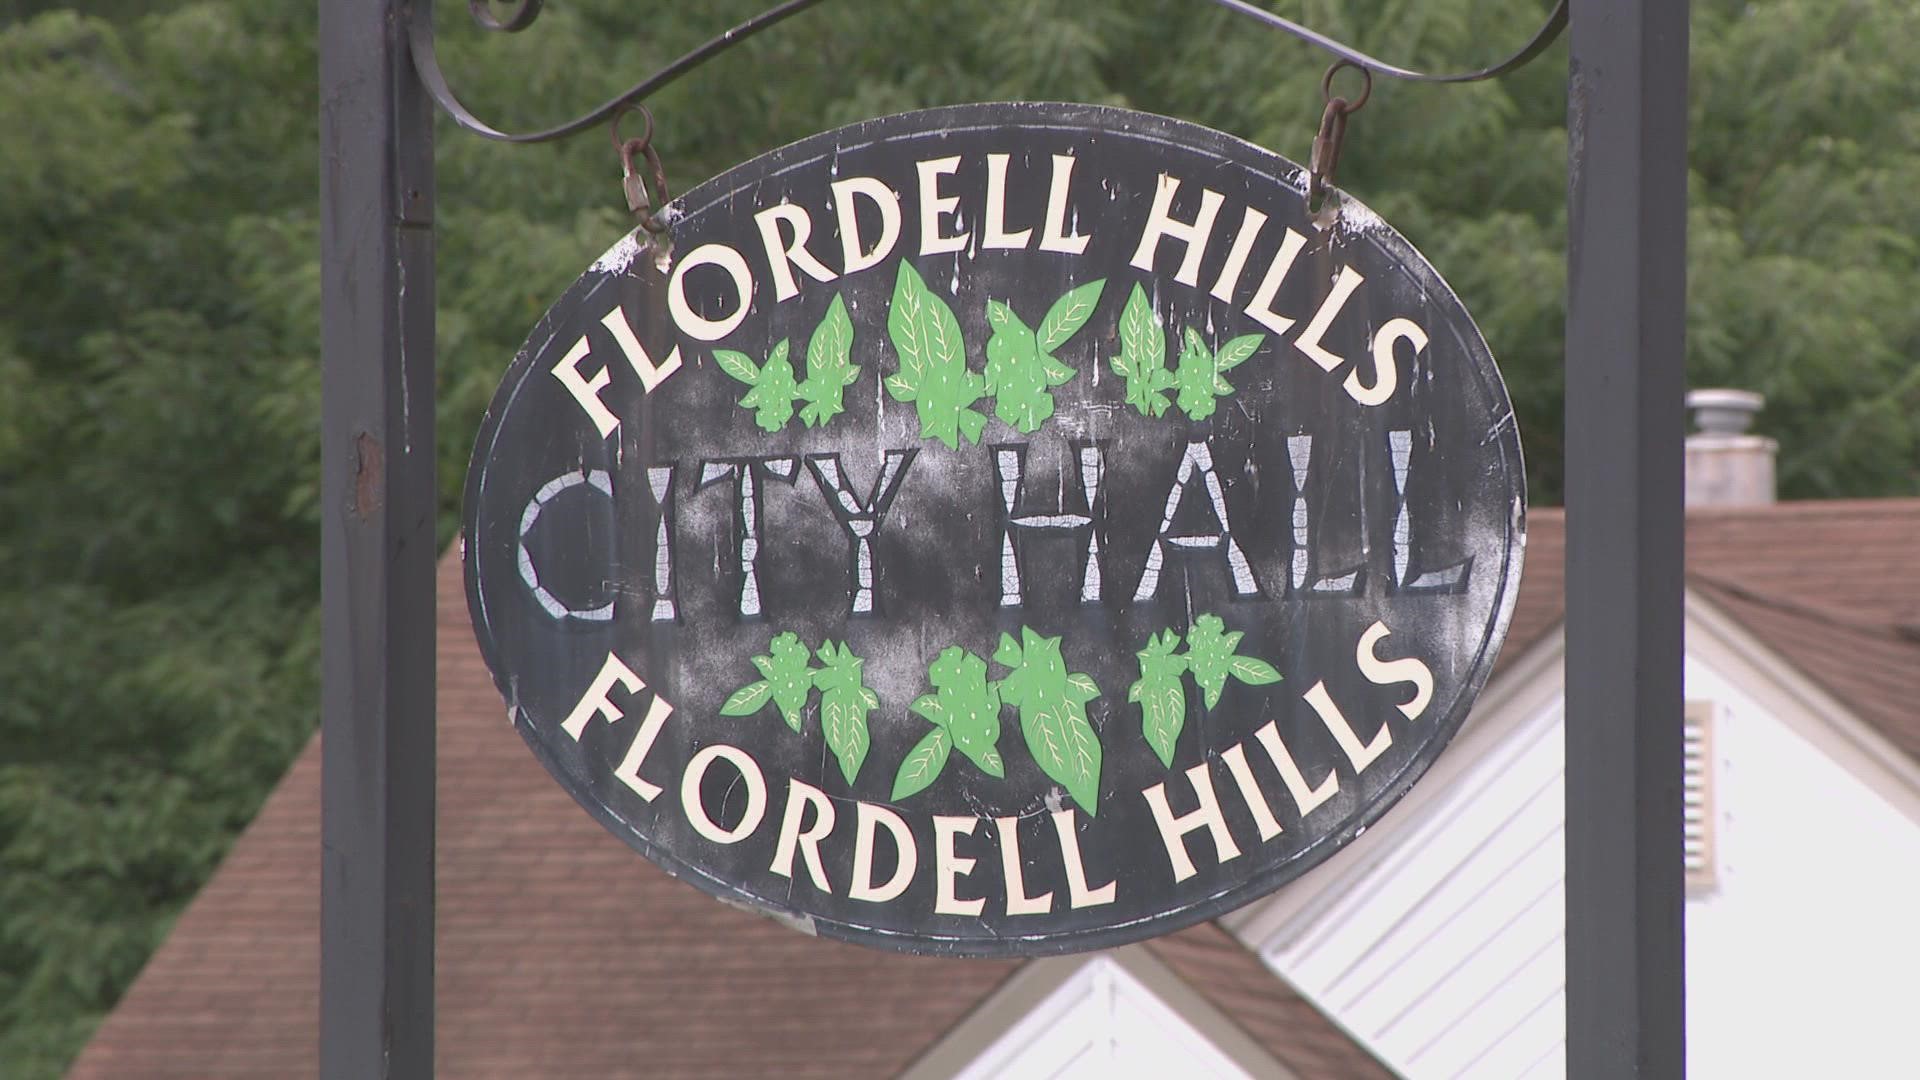 Former Flordell Hills city clerk sentenced stole thousands ksdk com